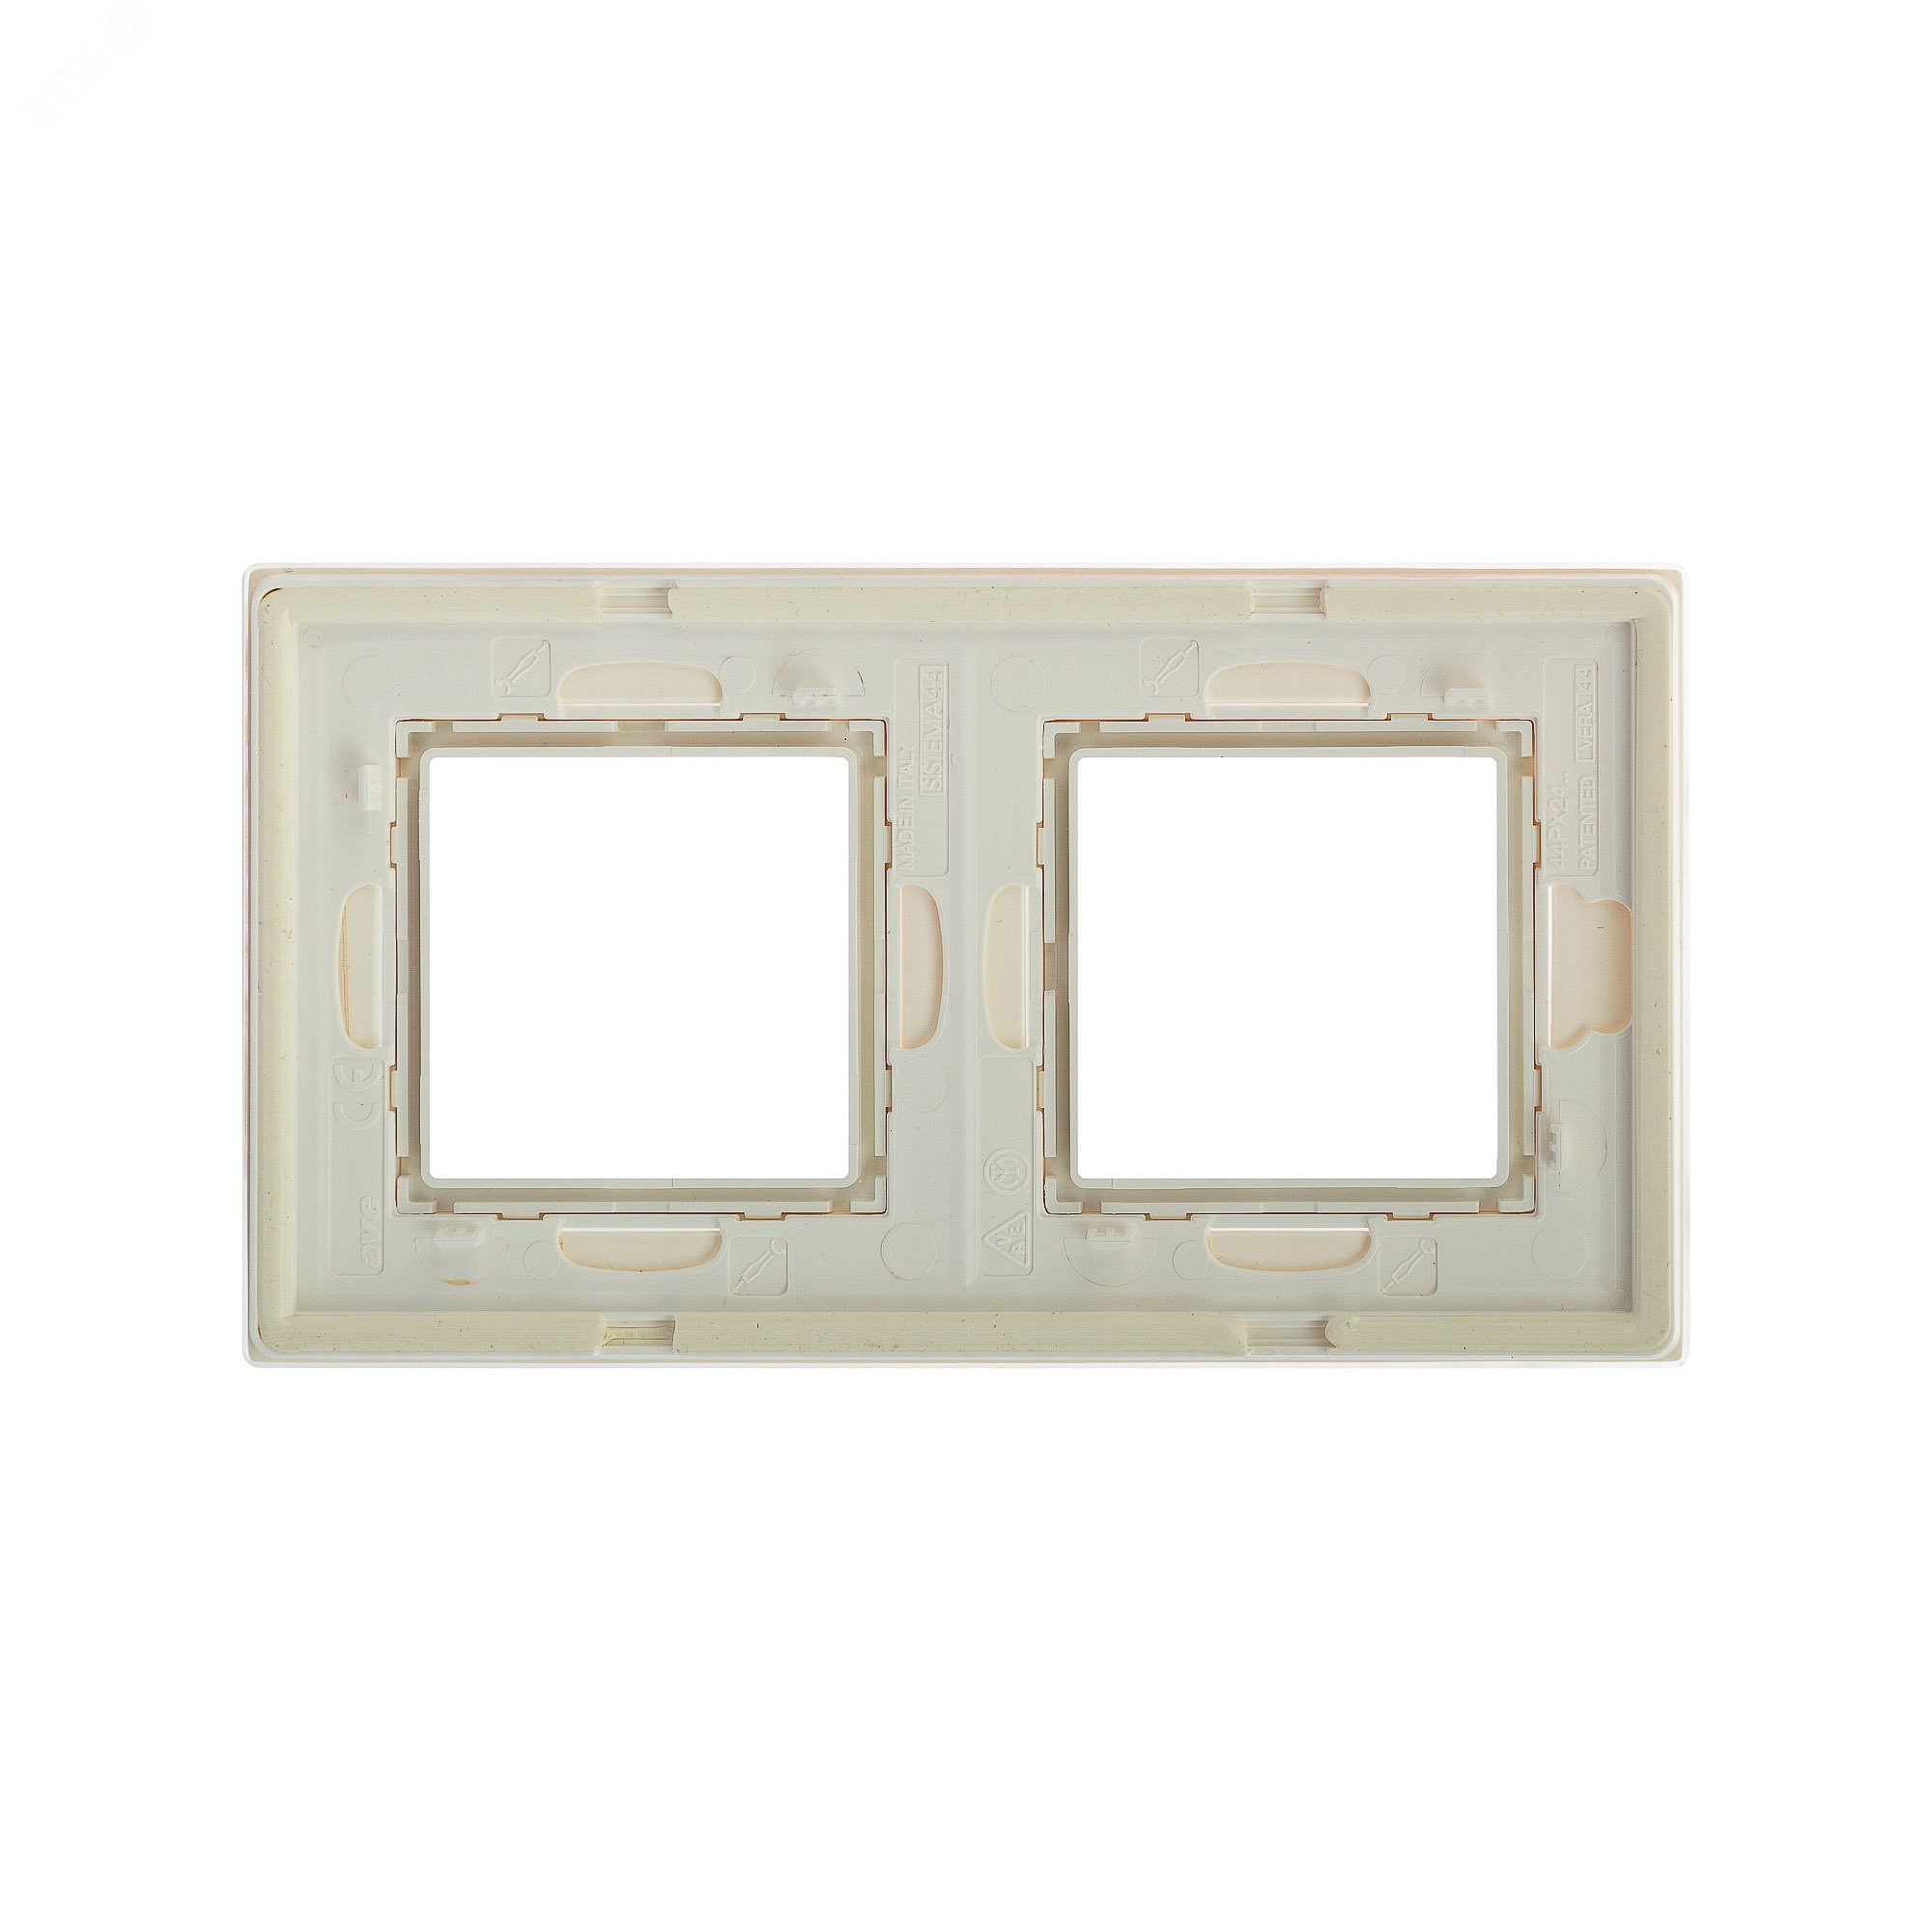 Рамка из натурального стекла, ''Avanti'', белая, 4 модуля 4400824 DKC - превью 4